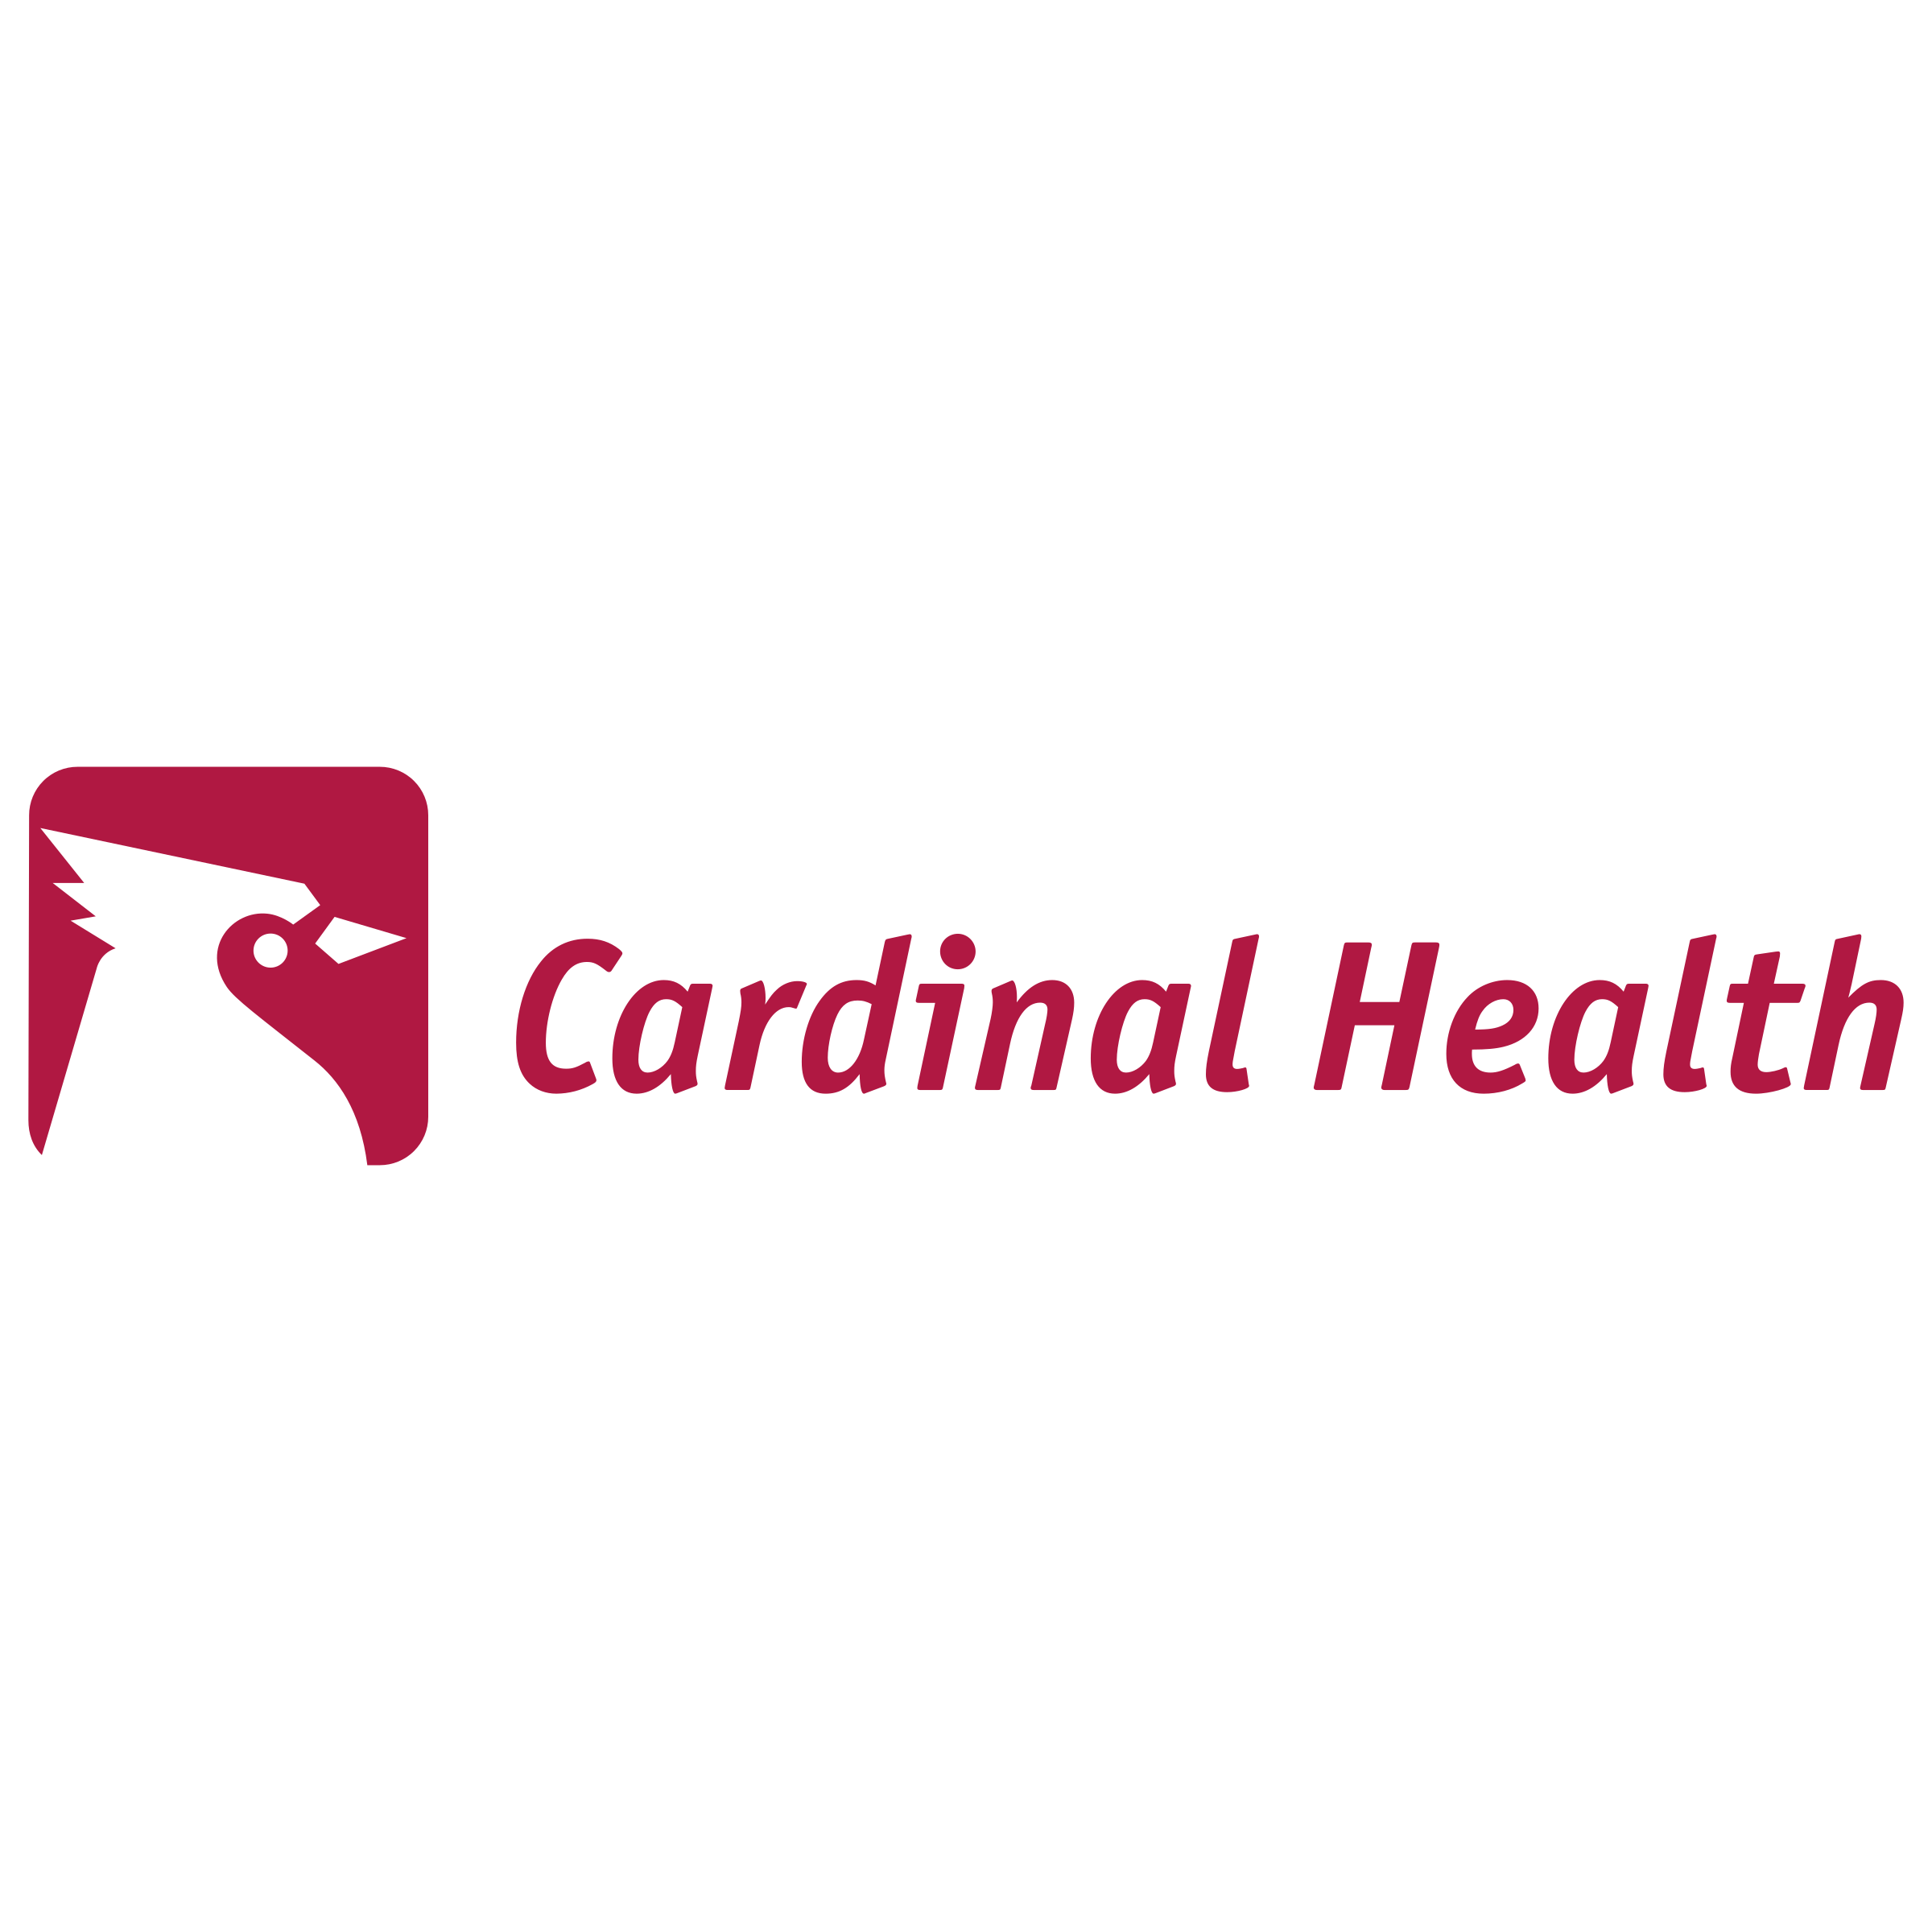 Cardinal Health Logo - Cardinal Health Logo PNG Transparent & SVG Vector - Freebie Supply